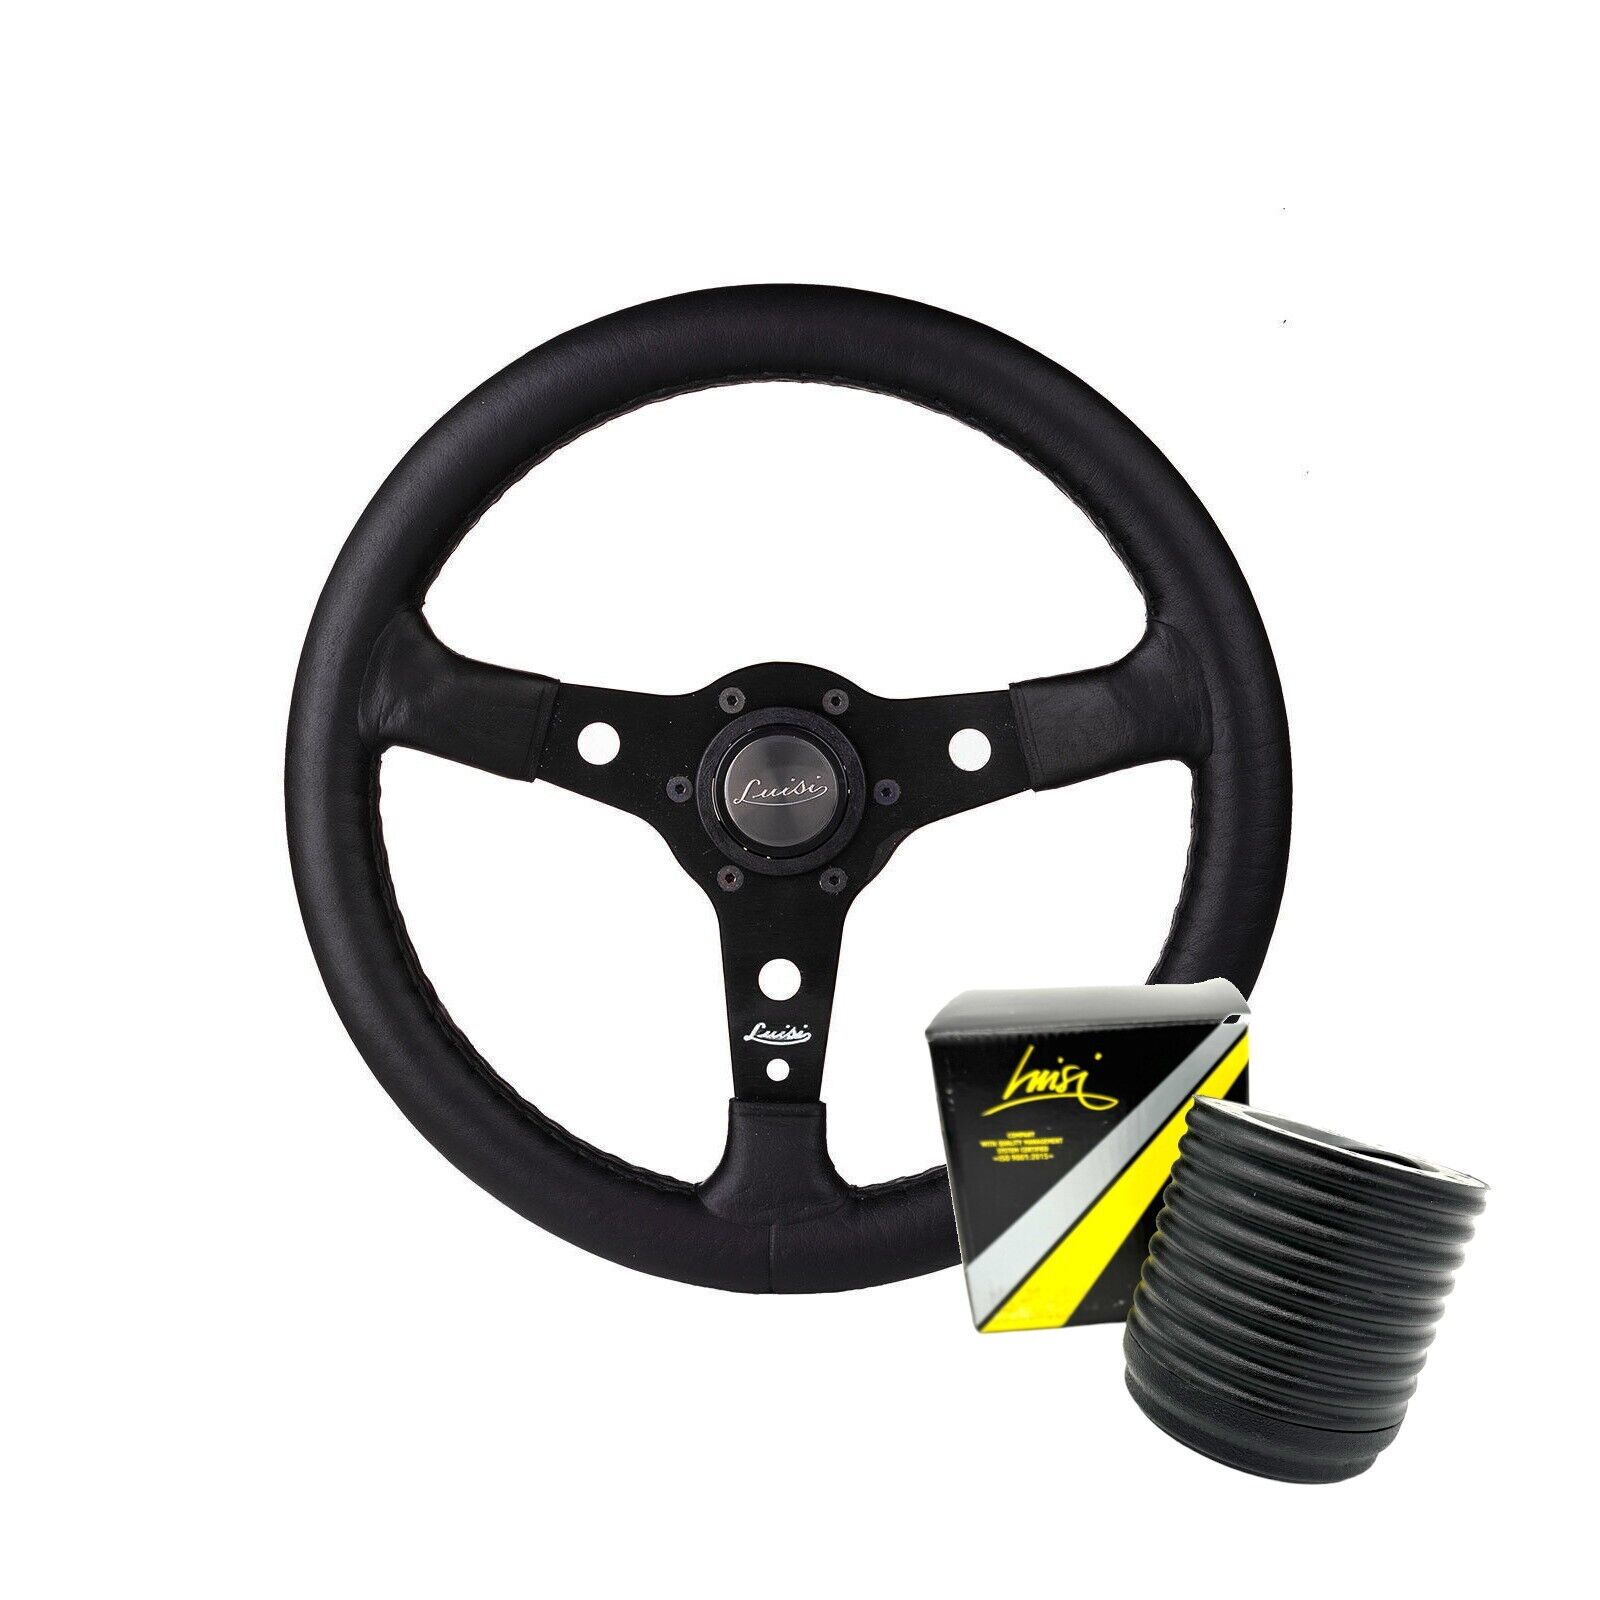 VW Golf MK3 Corrado Luisi Racing Steering Wheel Black Leather With Hub Kit 350mm